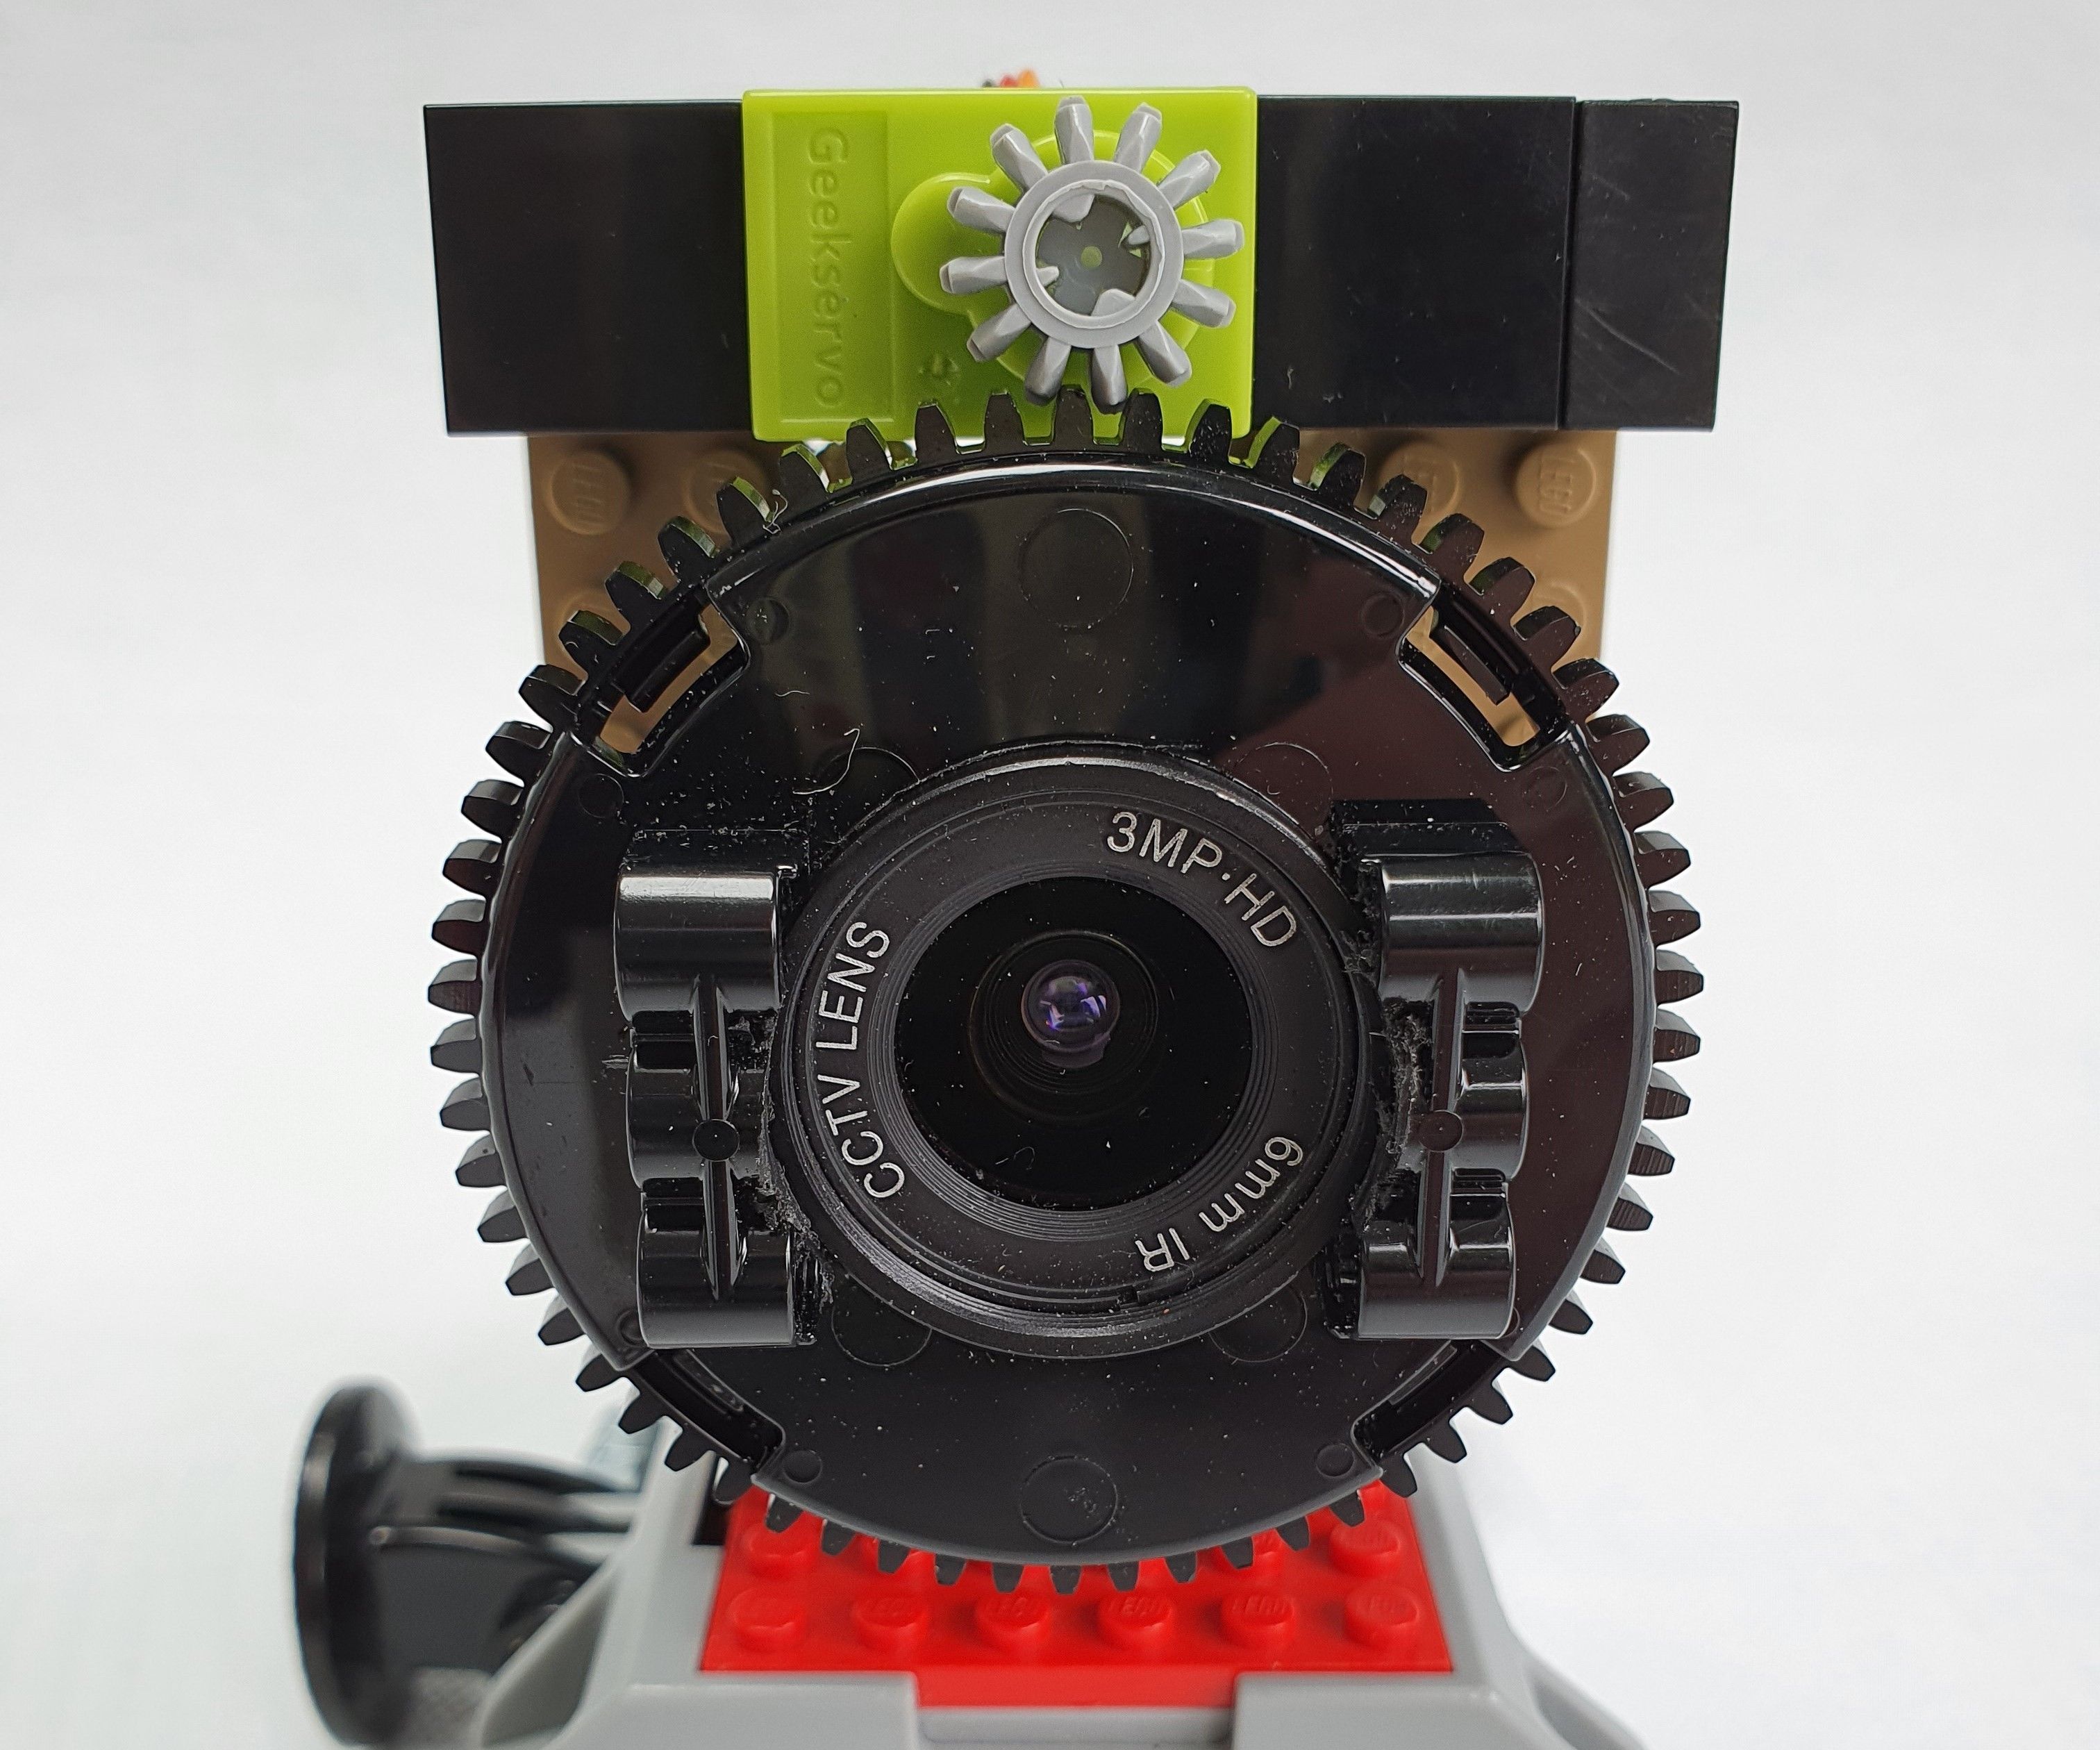 Focus the Pi High Quality Camera With Lego and a Servo